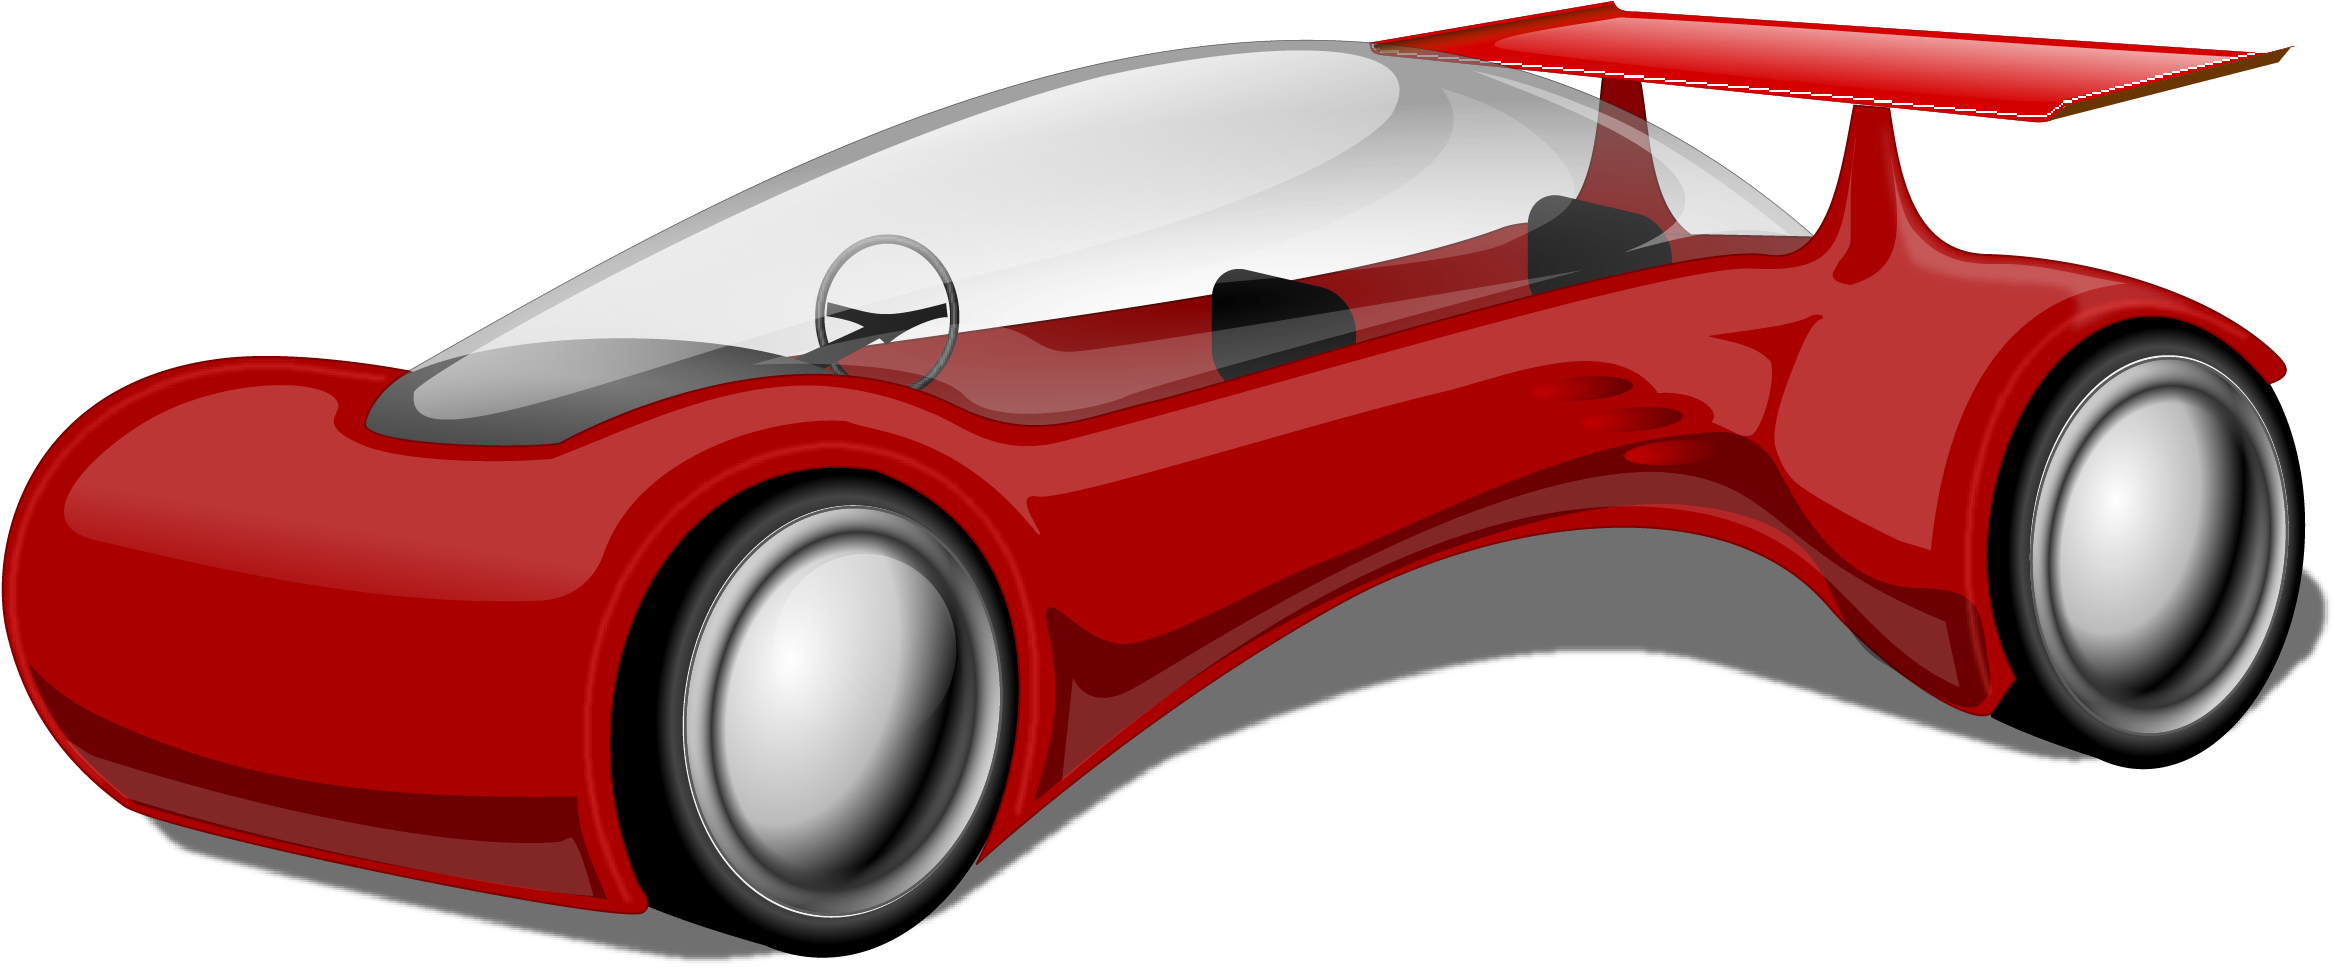 Sports Car Clip Art - Car Of The Future Cartoon (2660x1005)